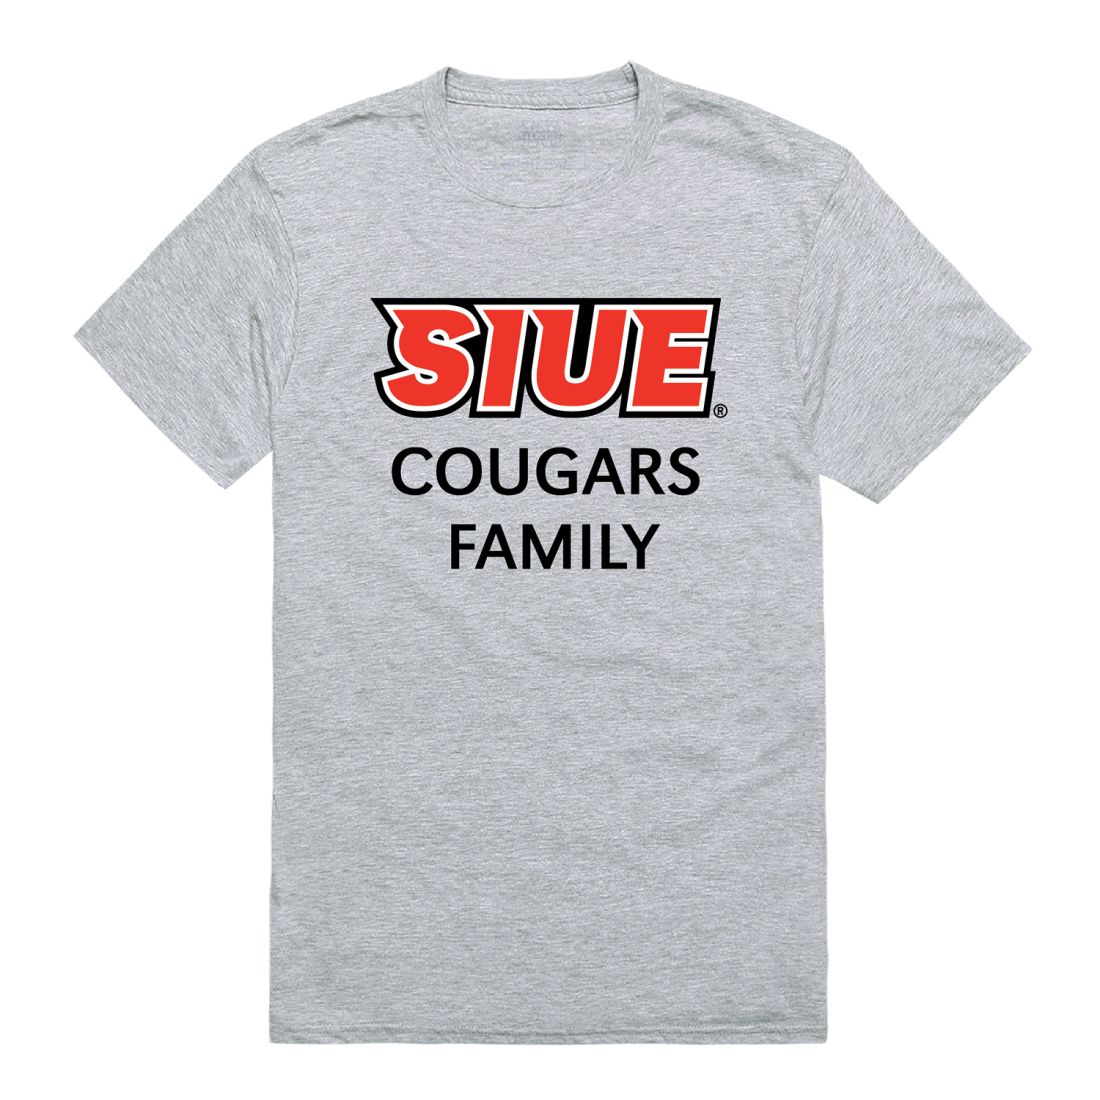 SIUE Southern Illinois University Edwardsville Cougars Family T-Shirt